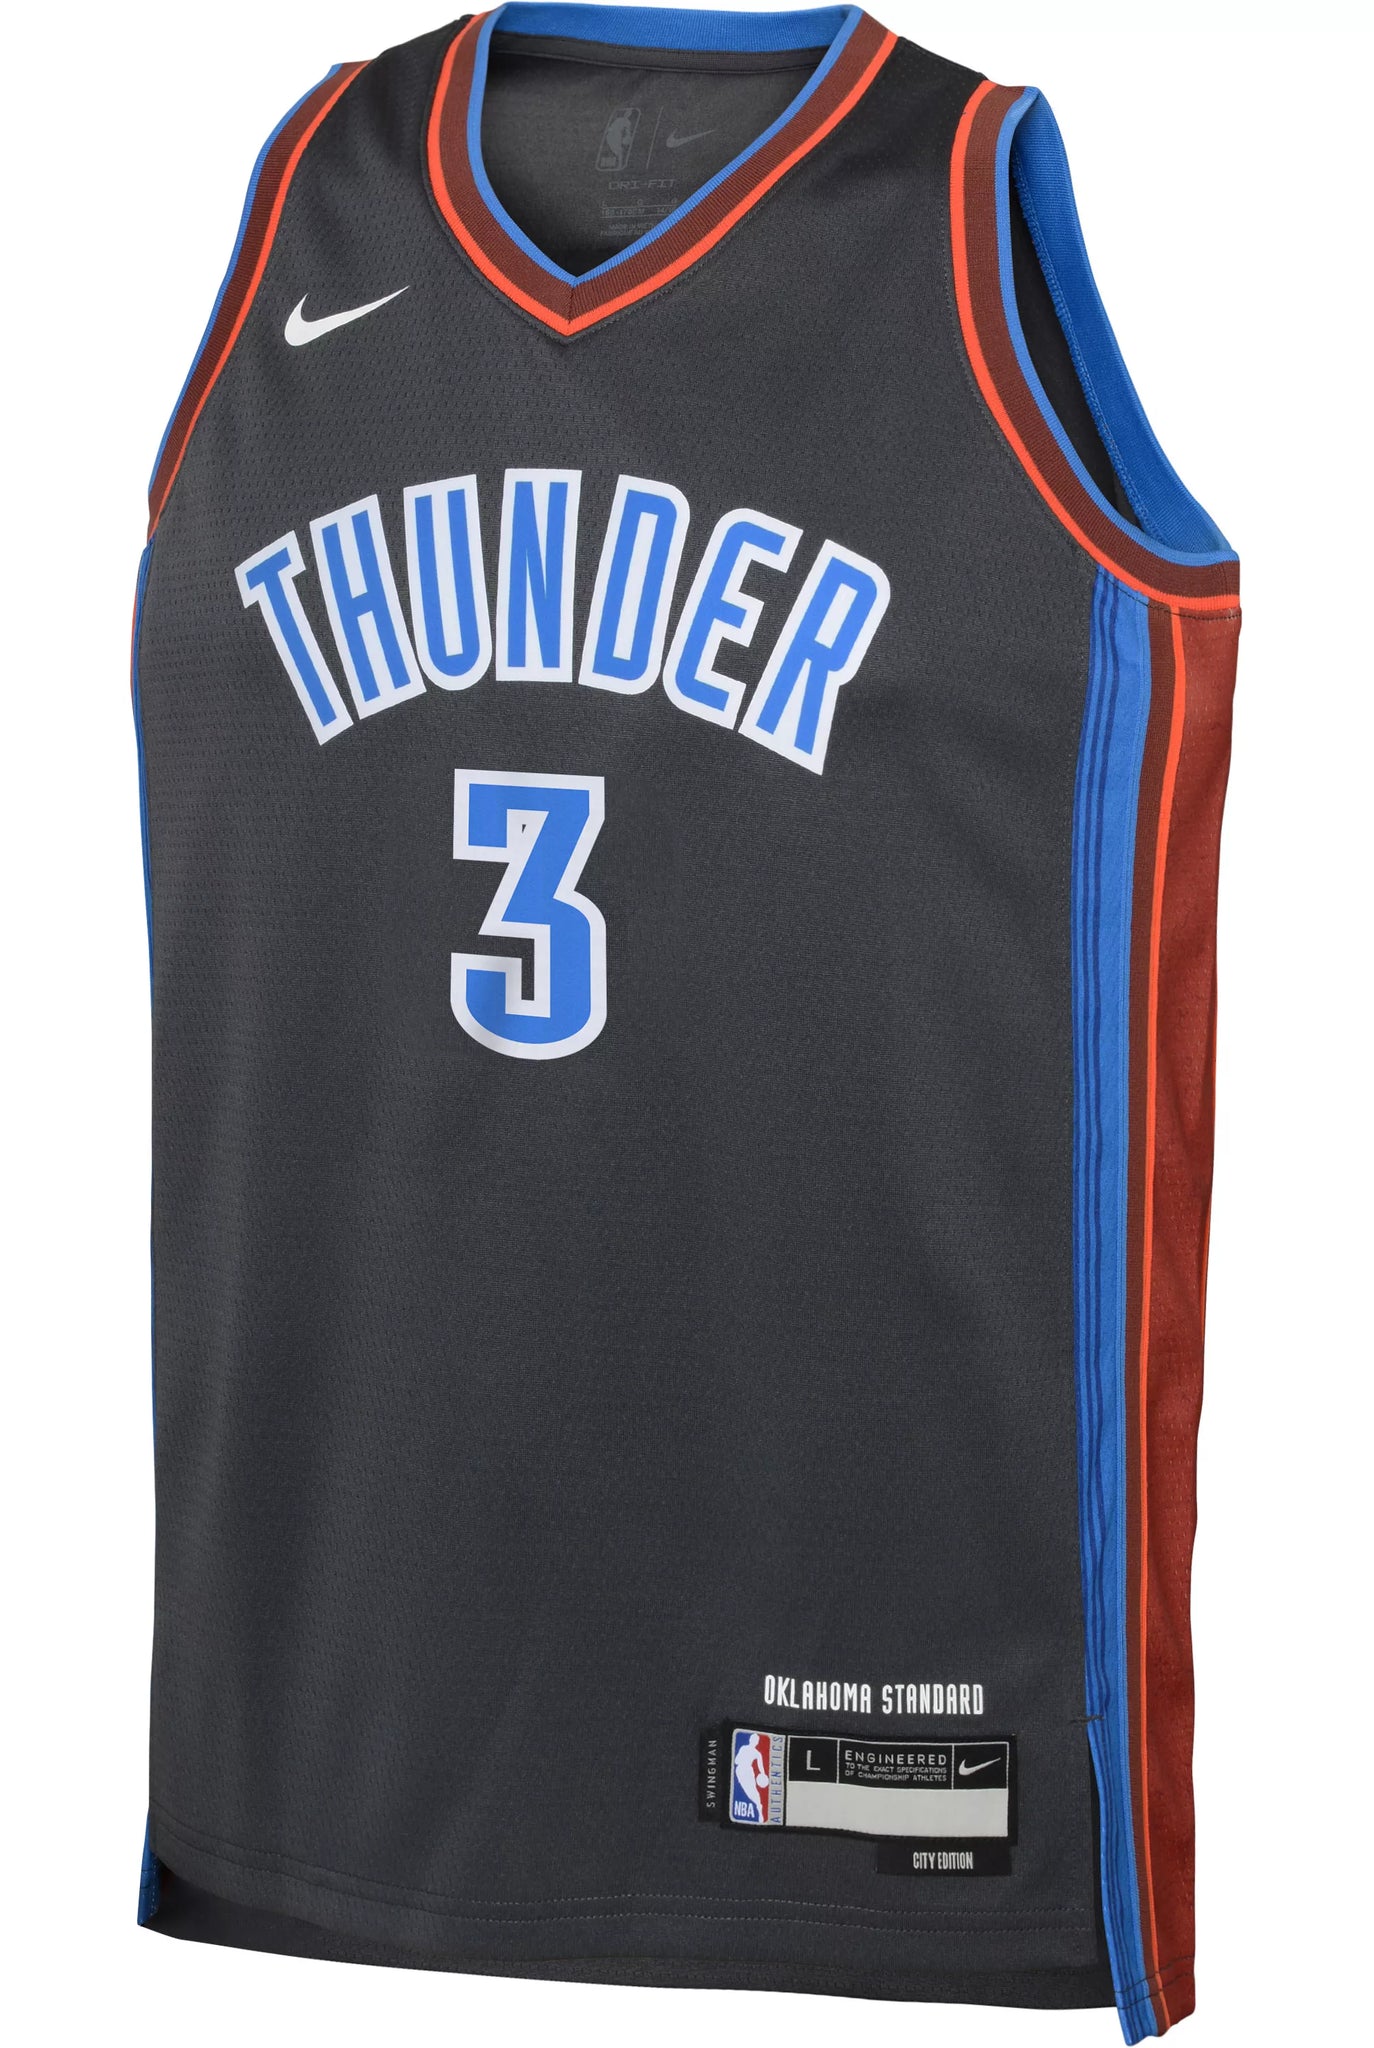 Josh Giddey Oklahoma City Thunder Basketball Premiere Signature Shirt -  Kingteeshop